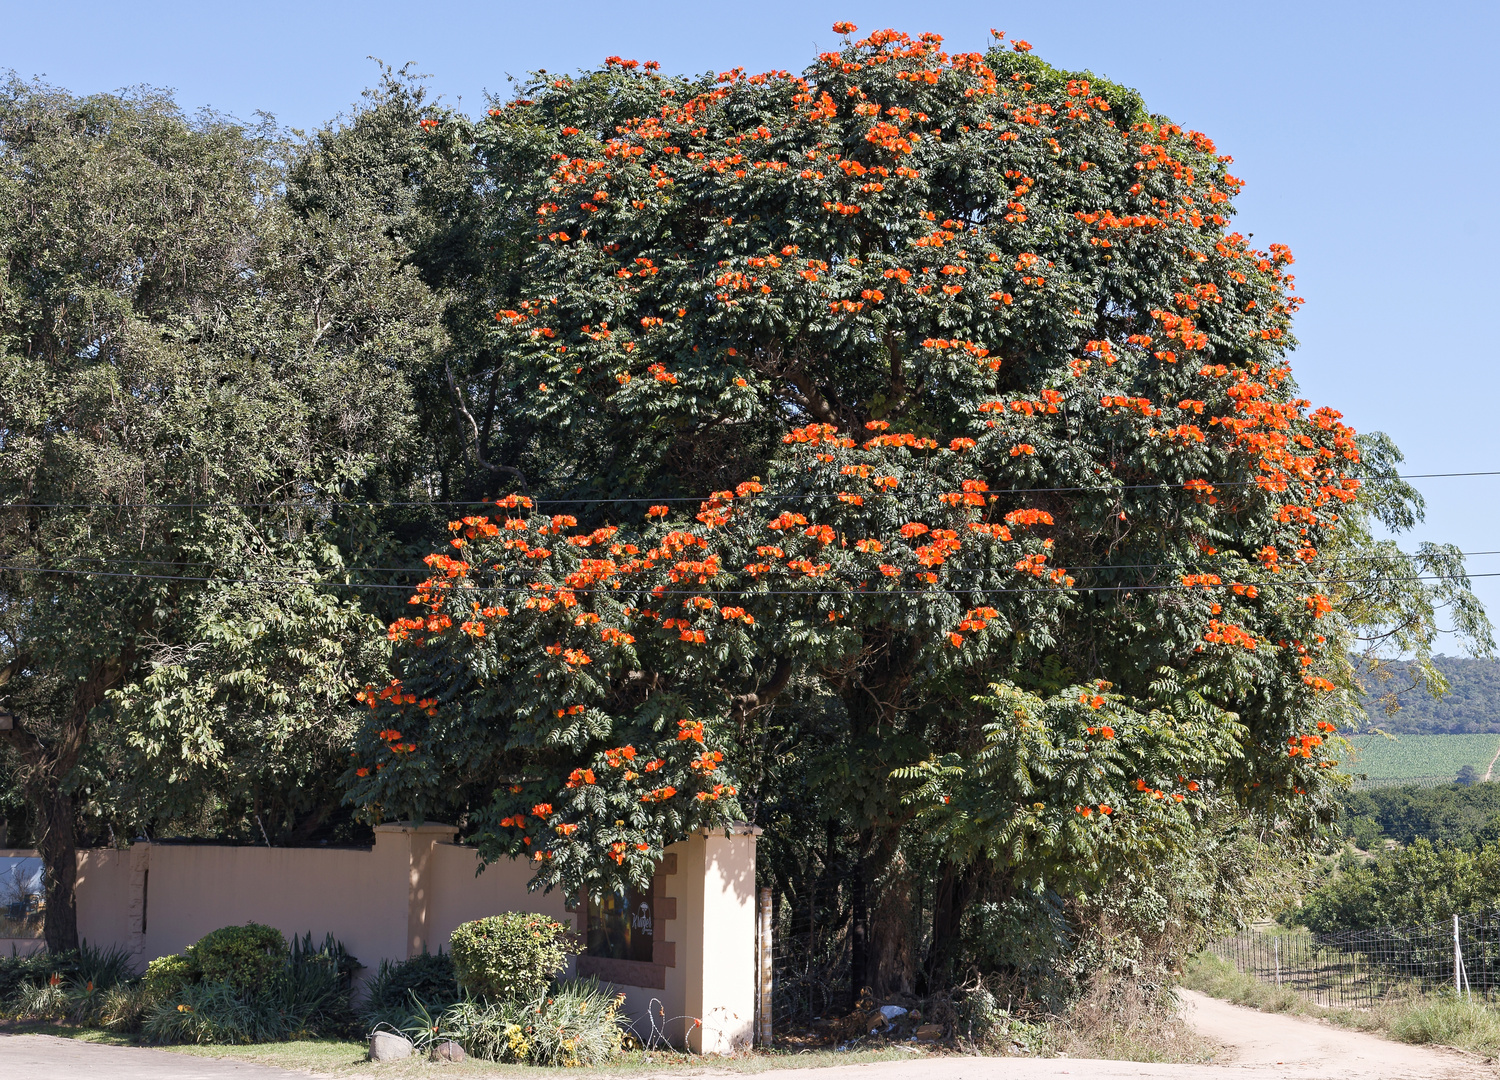 Afrikanischer Tulpenbaum